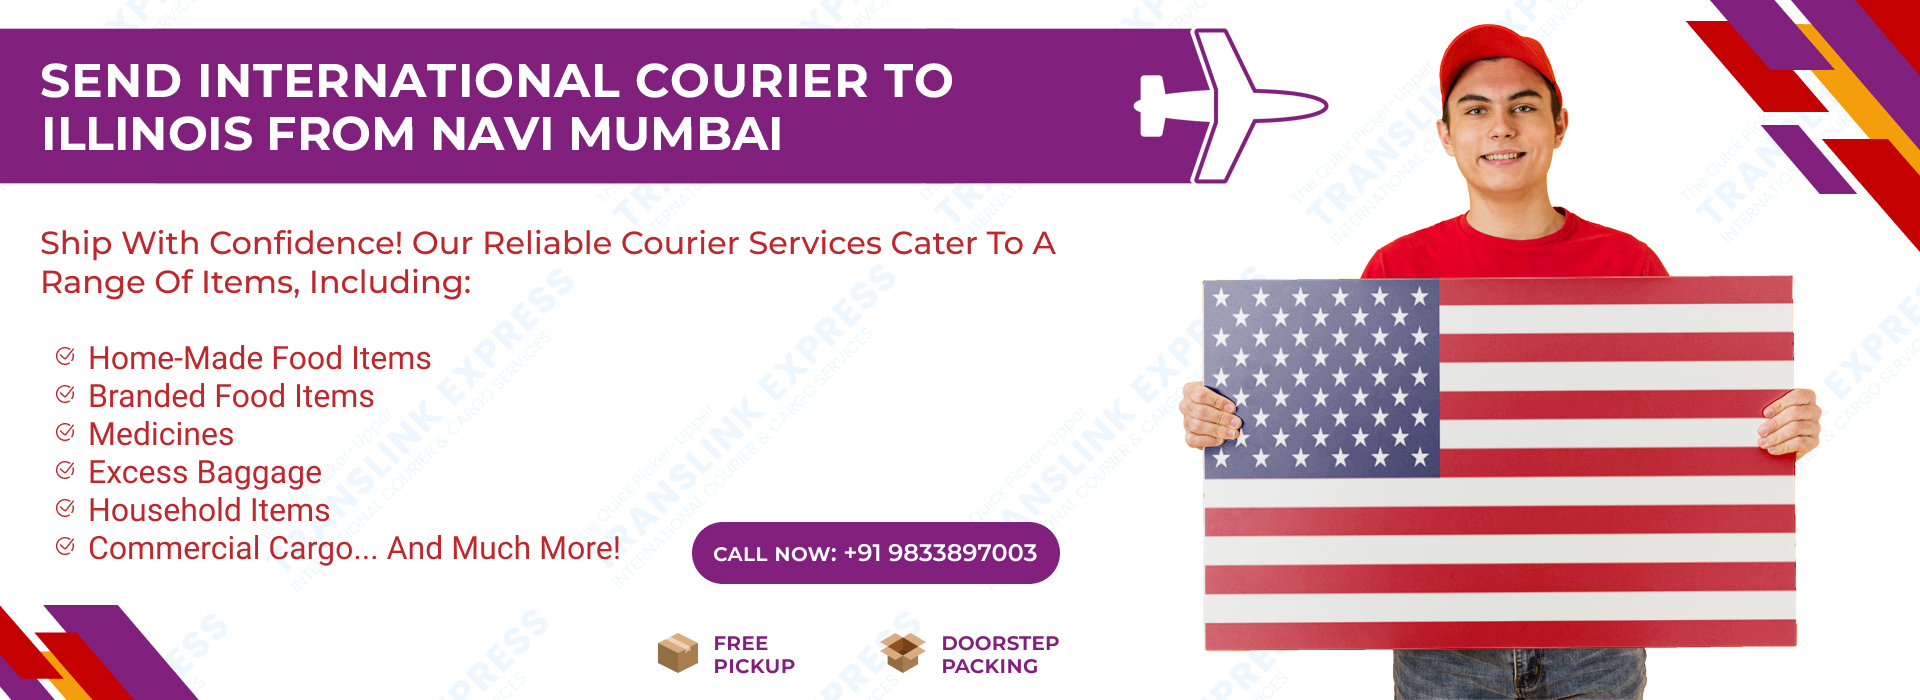 Courier to Illinois From Navi Mumbai